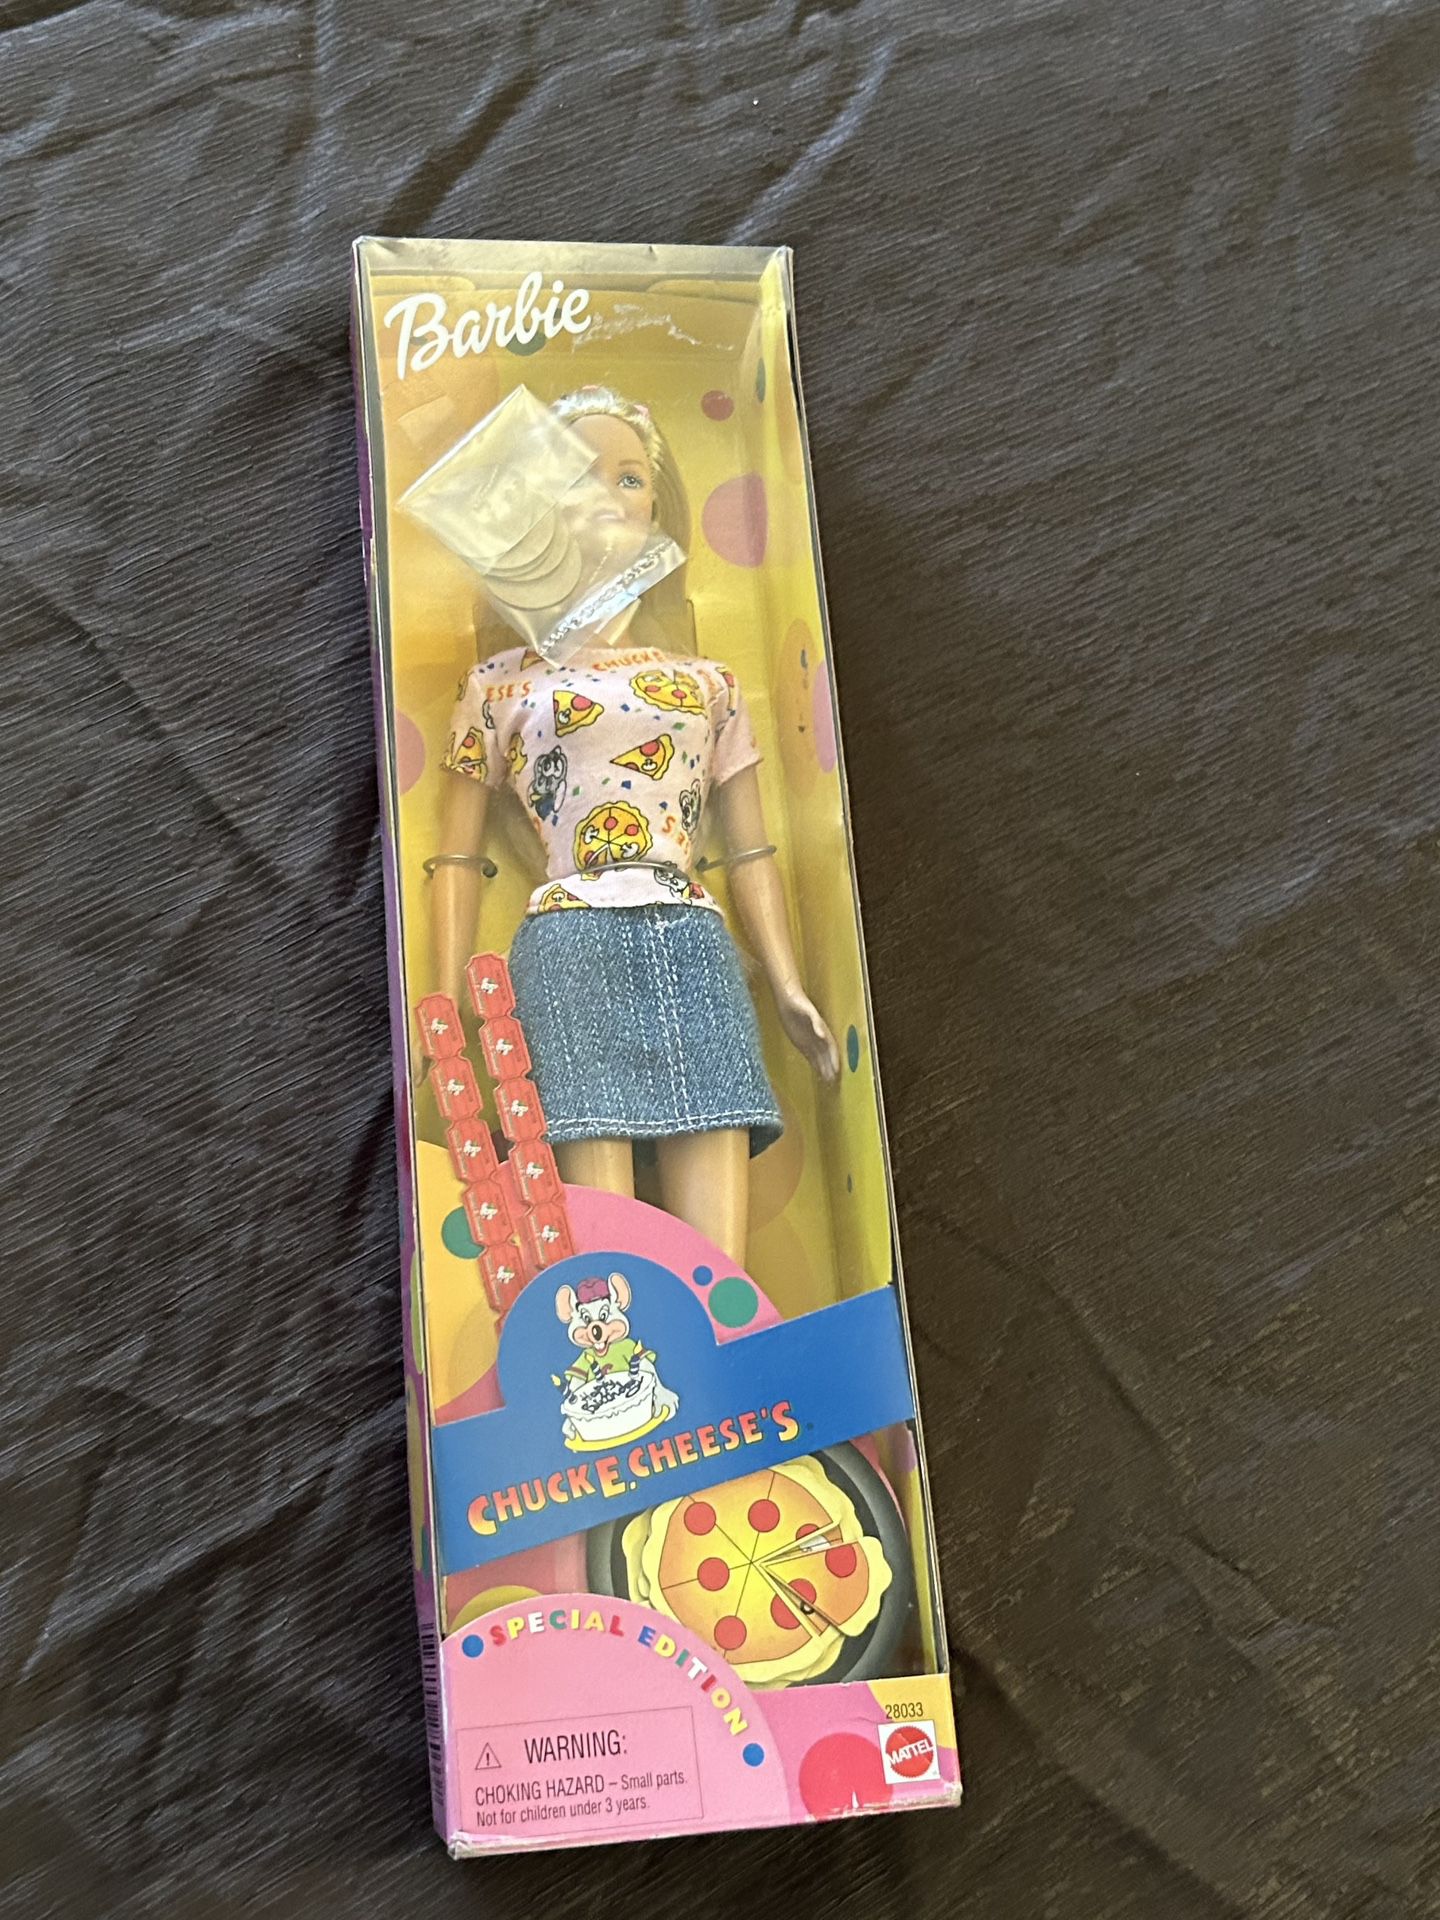 New (Chuk e cheese) Barbie Doll